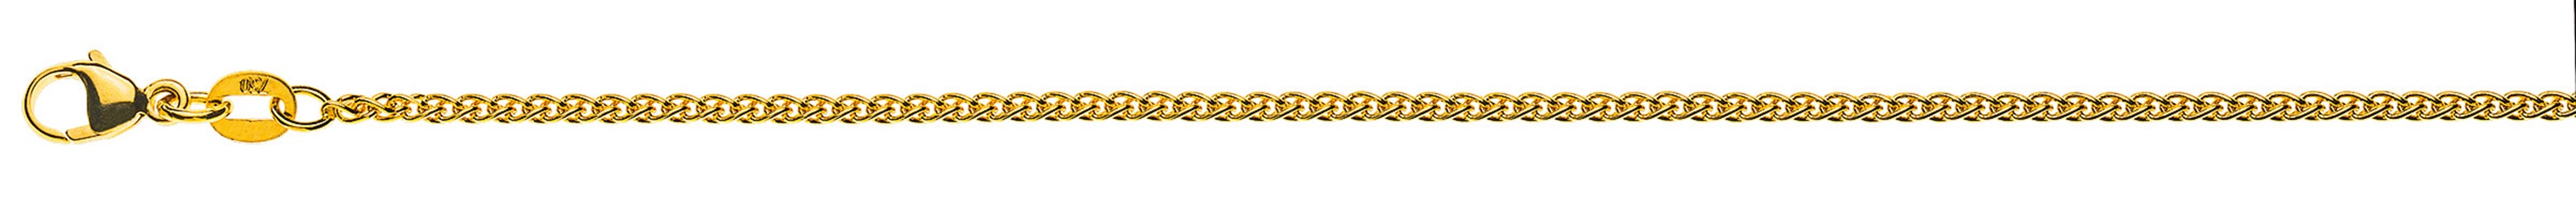 AURONOS Prestige Necklace yellow gold 18K cable chain 42cm 1.6mm